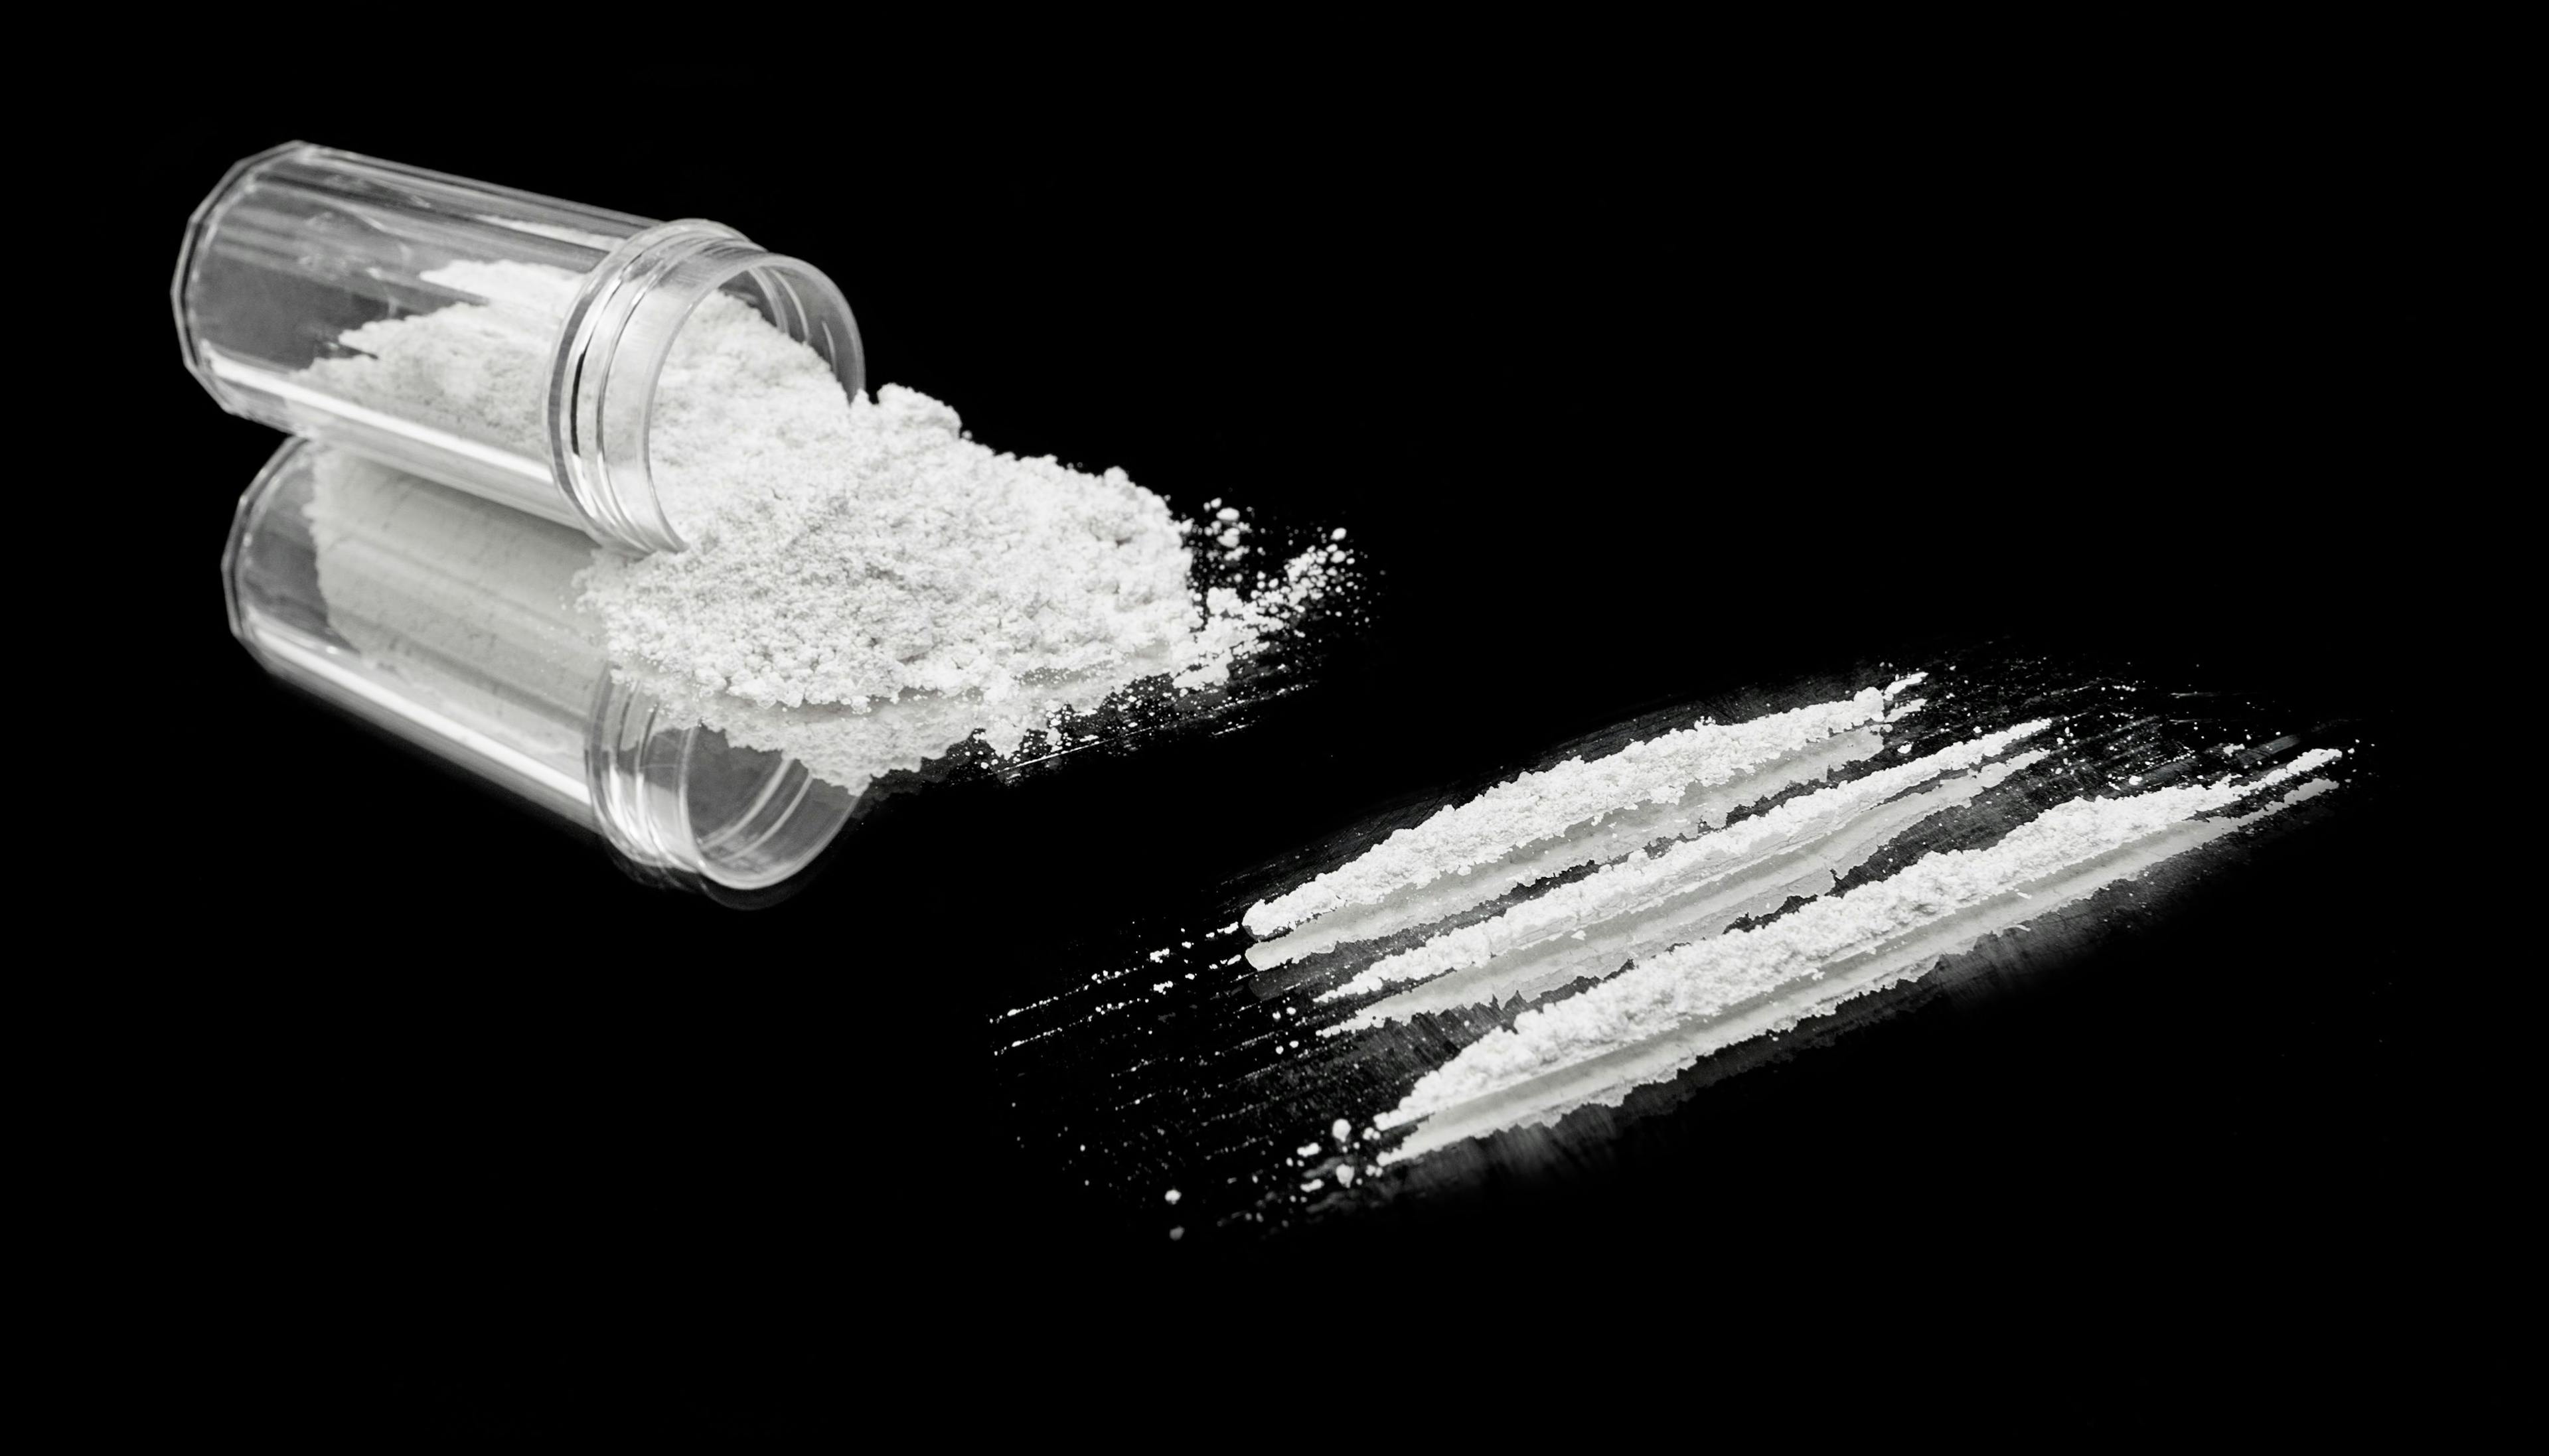 Substance abuse using cocaine | Image Credit: © robtek - stock.adobe.com